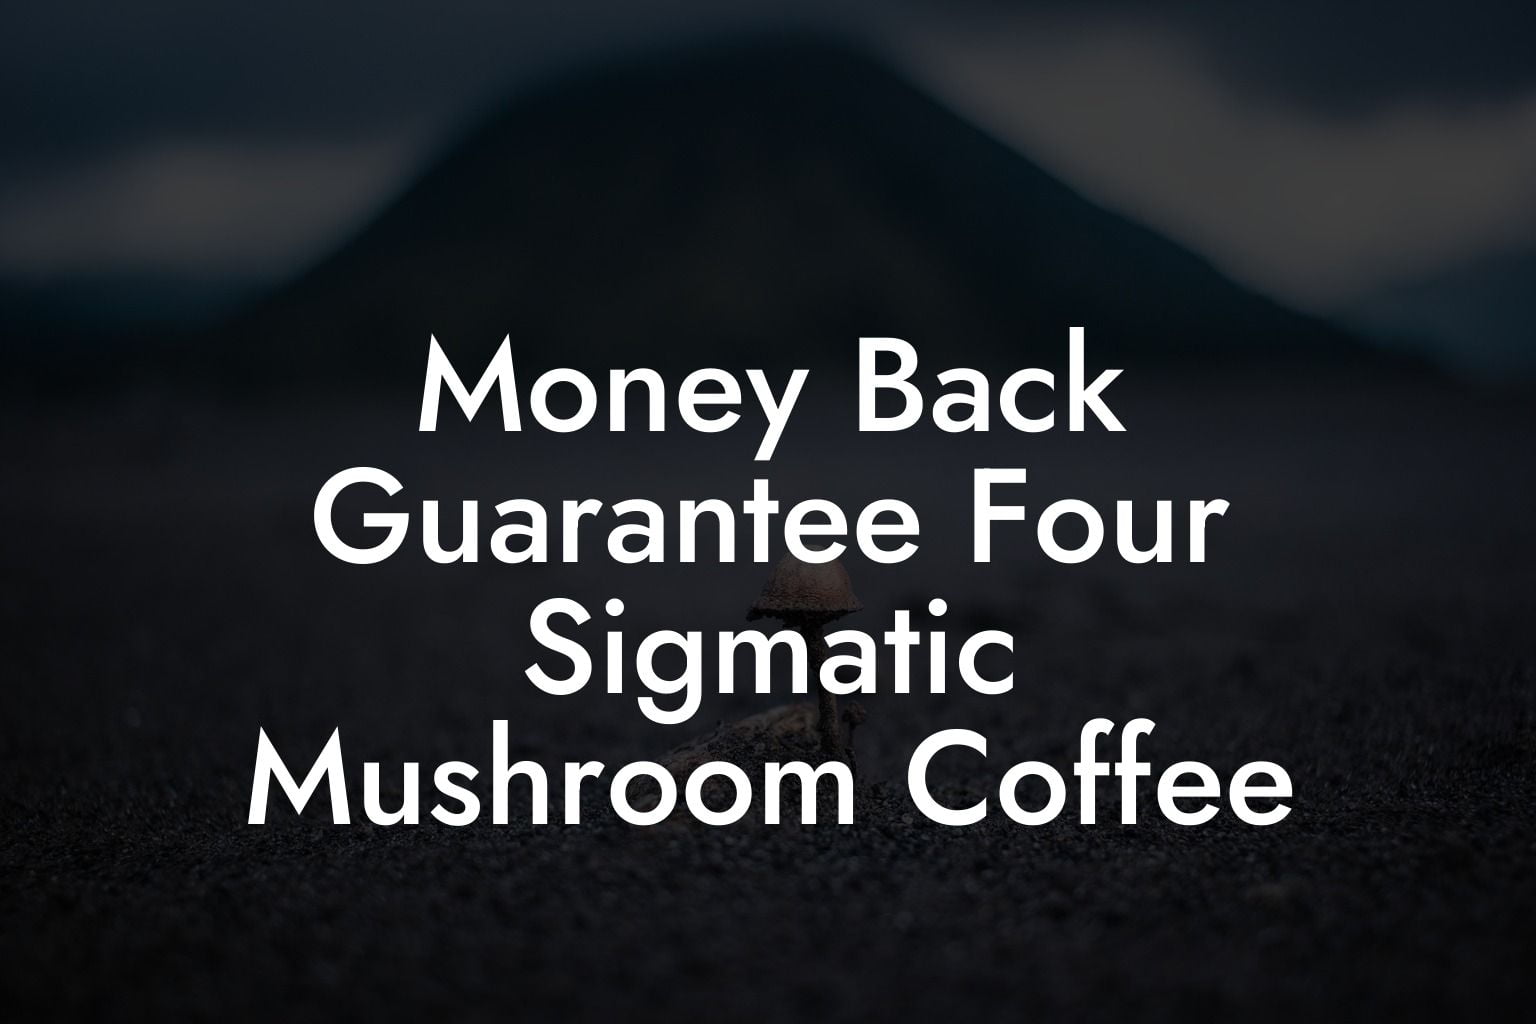 Money Back Guarantee Four Sigmatic Mushroom Coffee